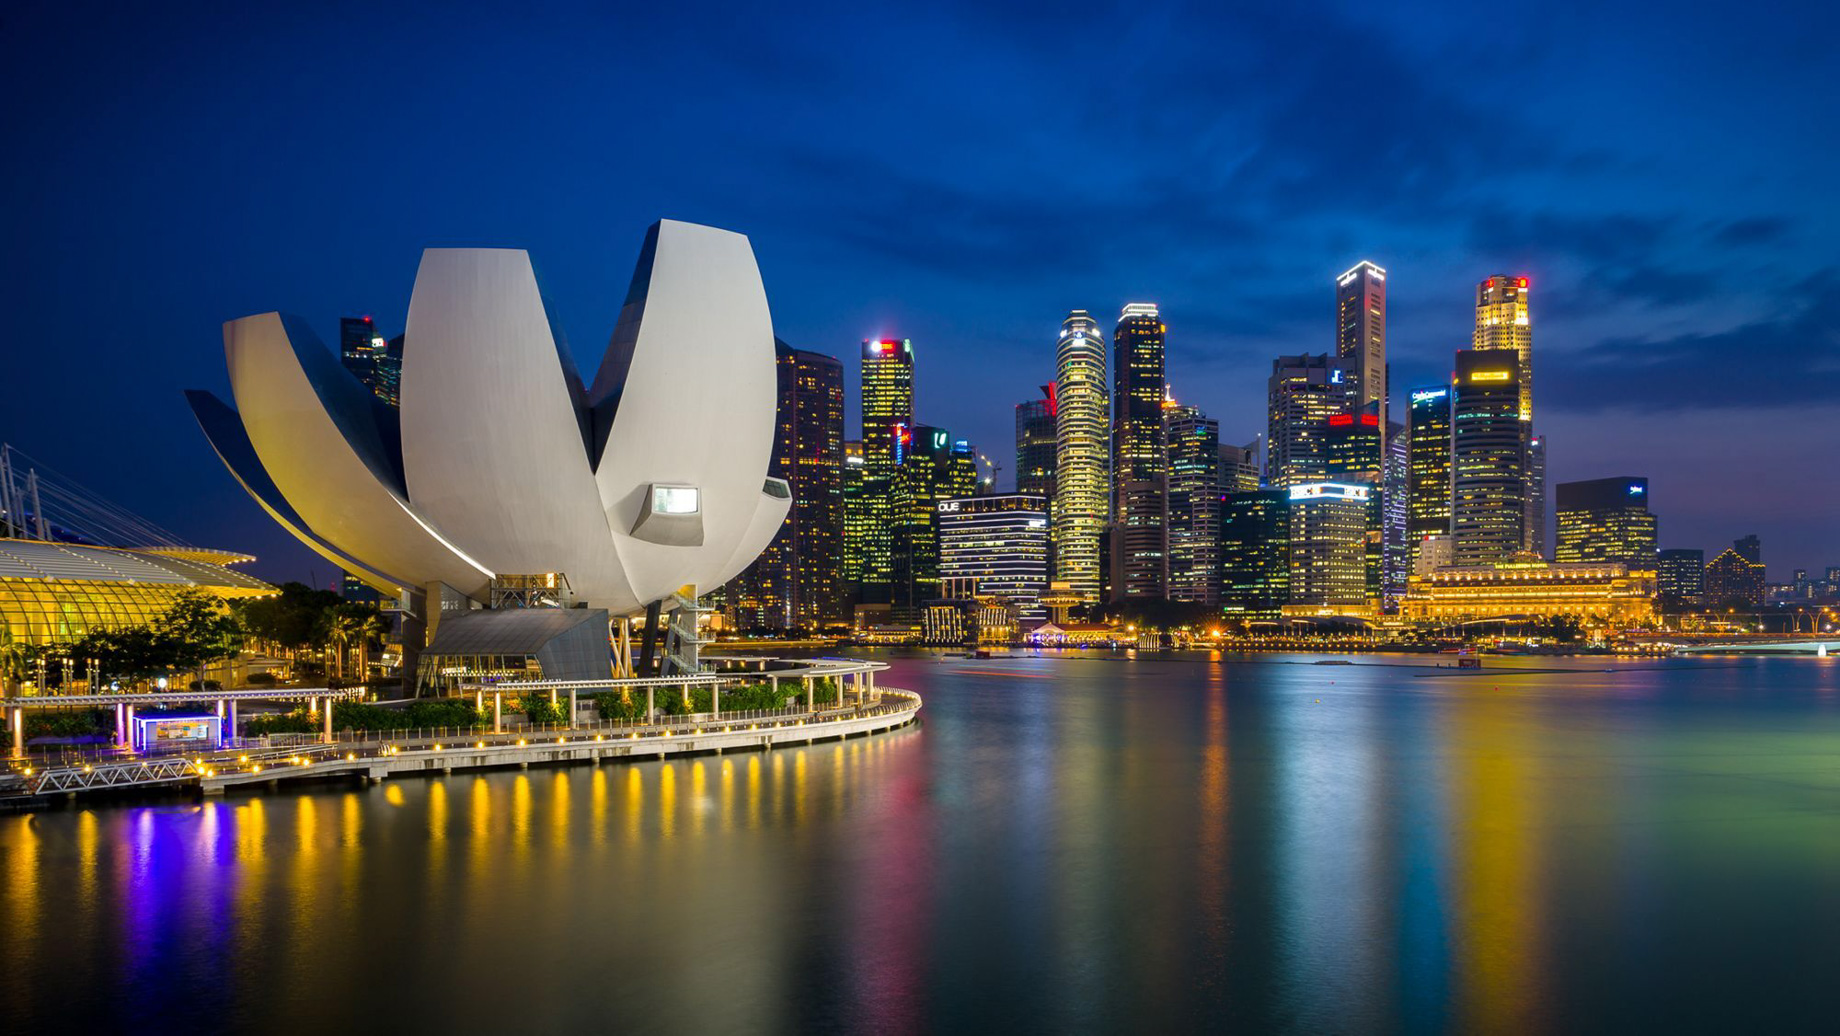 The Ritz-Carlton, Millenia Singapore Hotel – Singapore – Millenia Walk and Marina Square